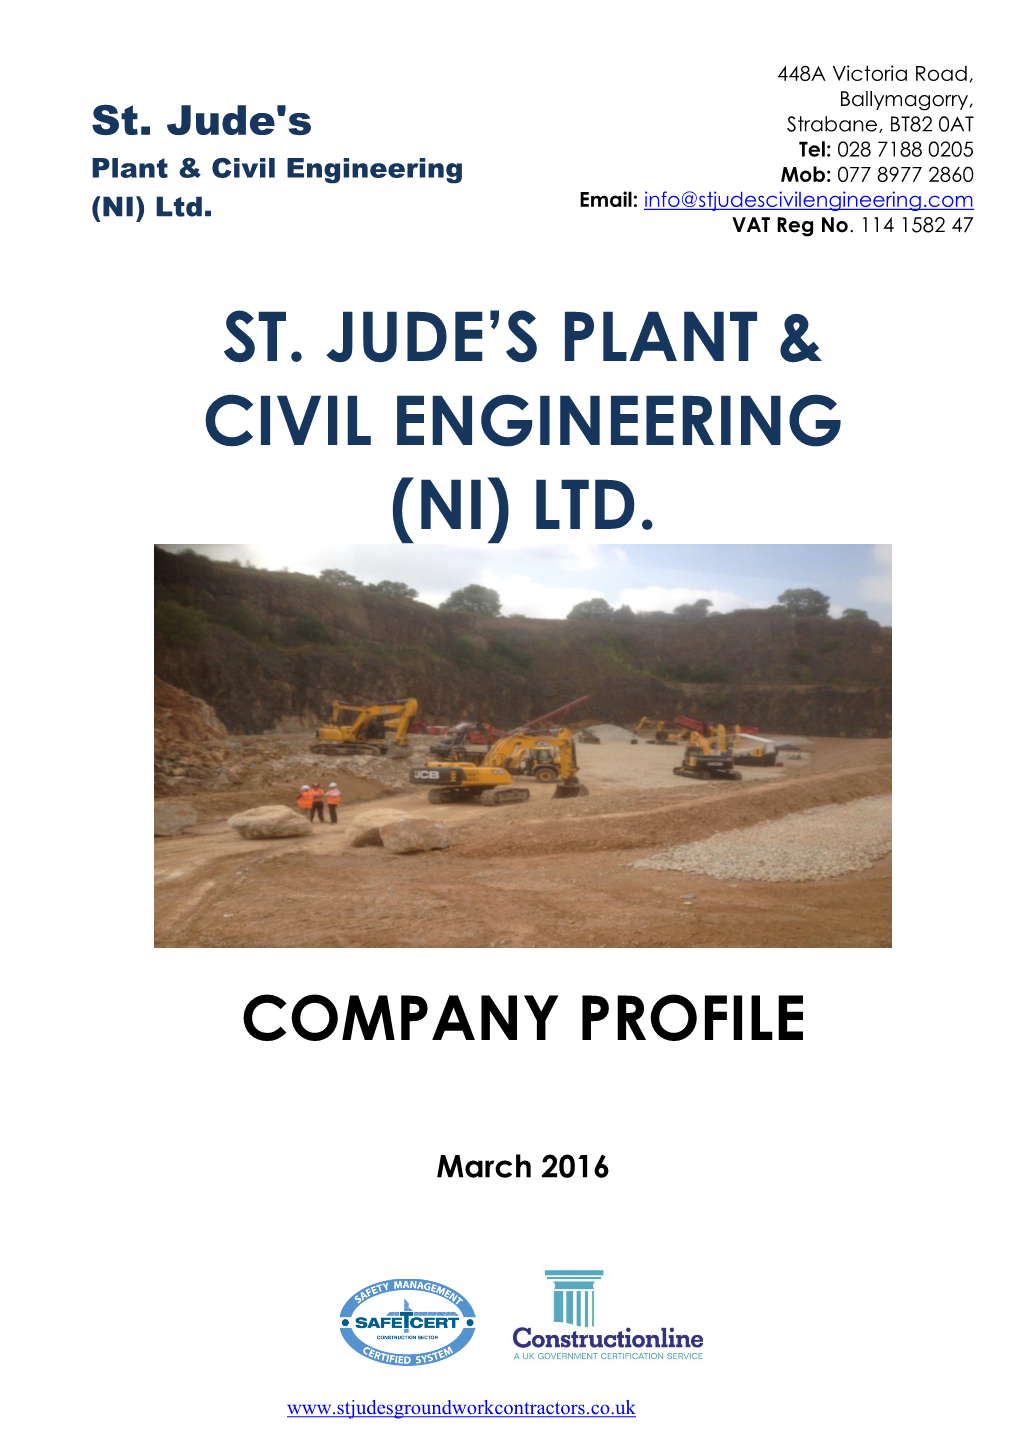 St. Jude's Plant & Civil Engineering (Ni) Ltd